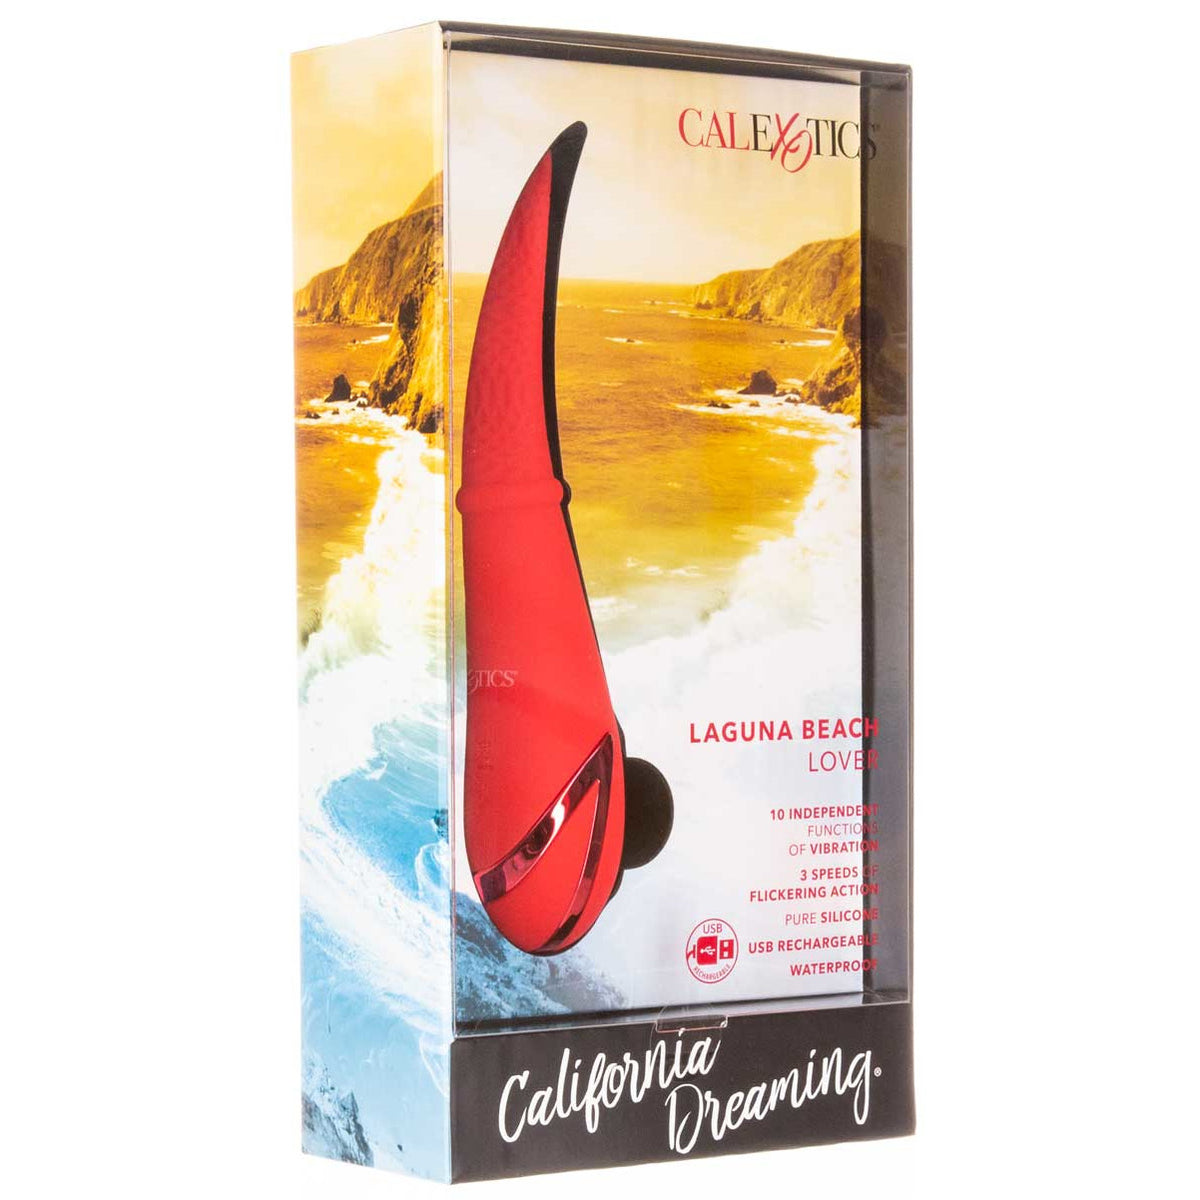 CalExotics California Dreaming – Laguna Beach Lover – Red